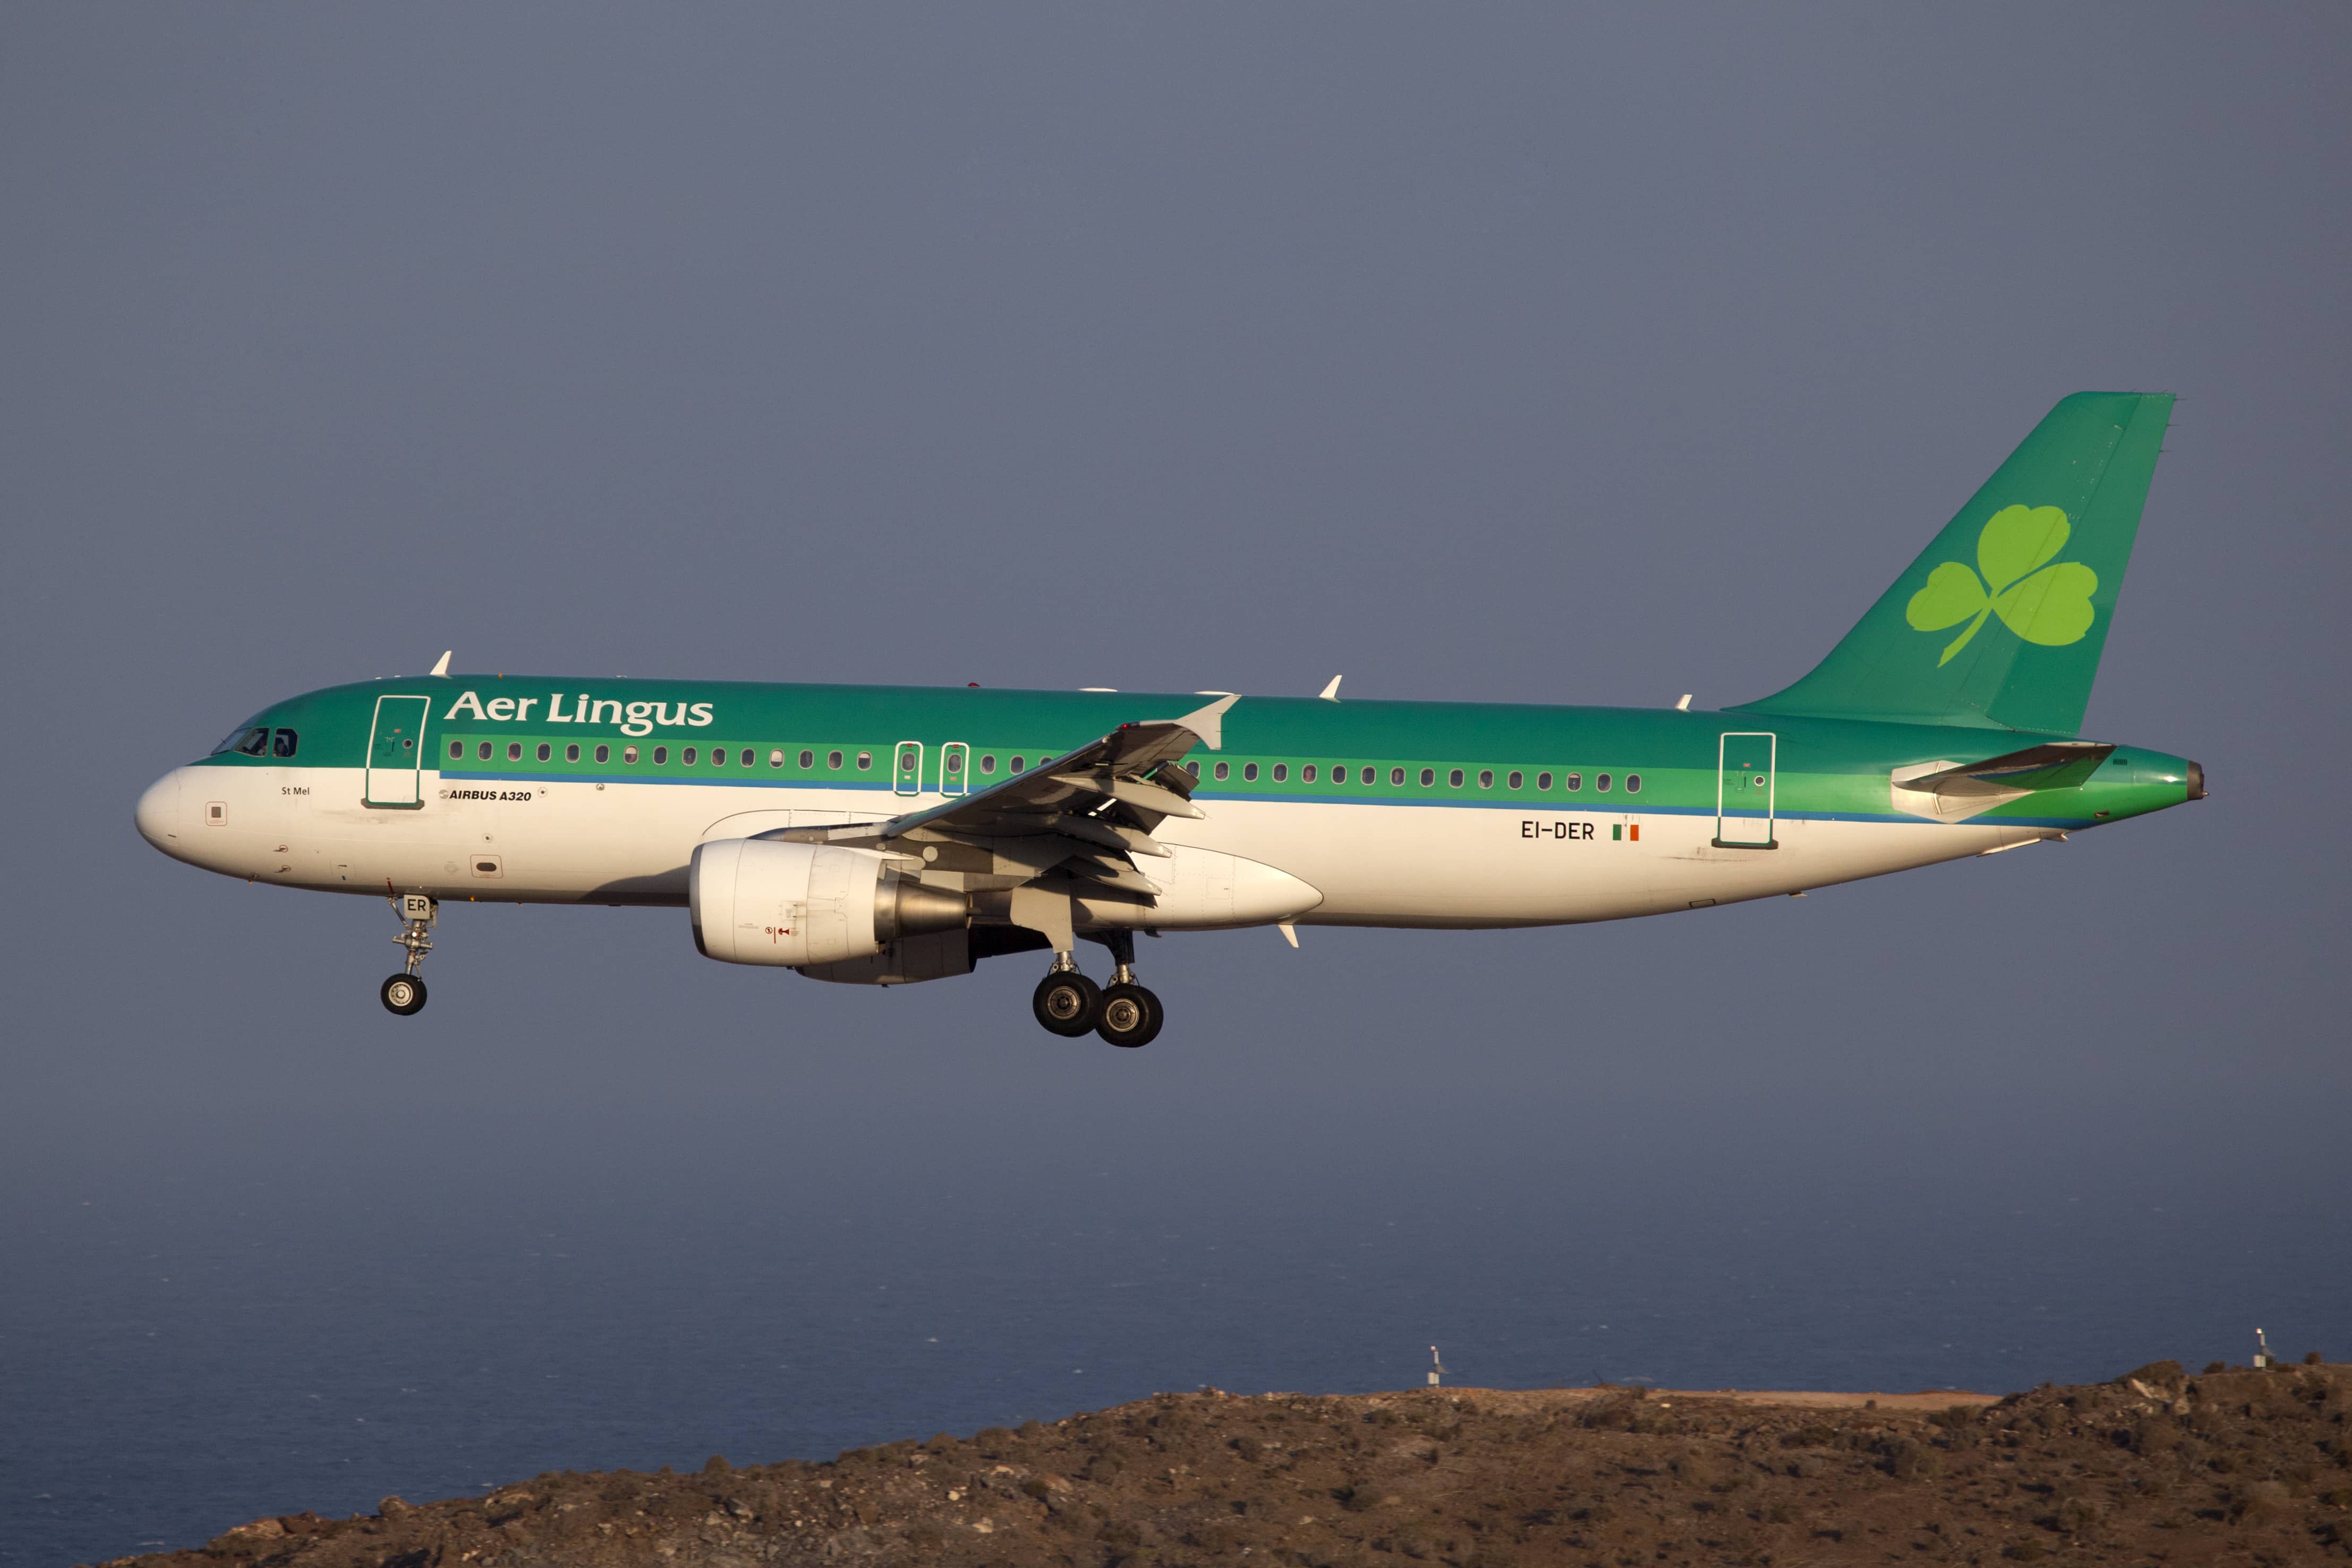 Aer Lingus aircraft in flight 